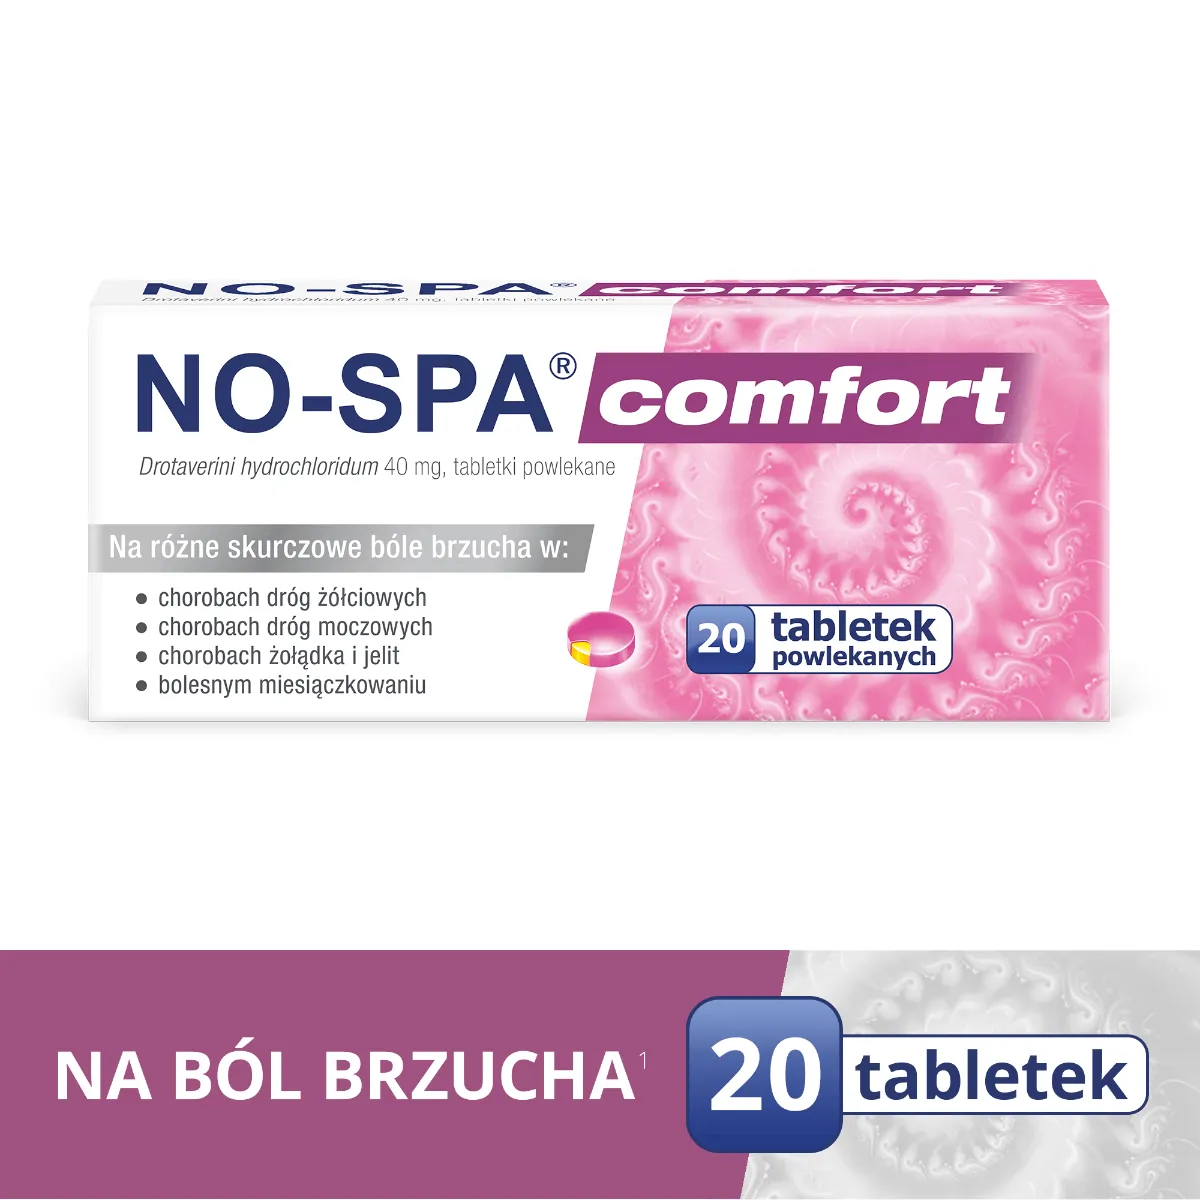 No-Spa Comfort, Drotaverini hydrochloridum 40 mg, tabletki powlekane, 20 tabletek